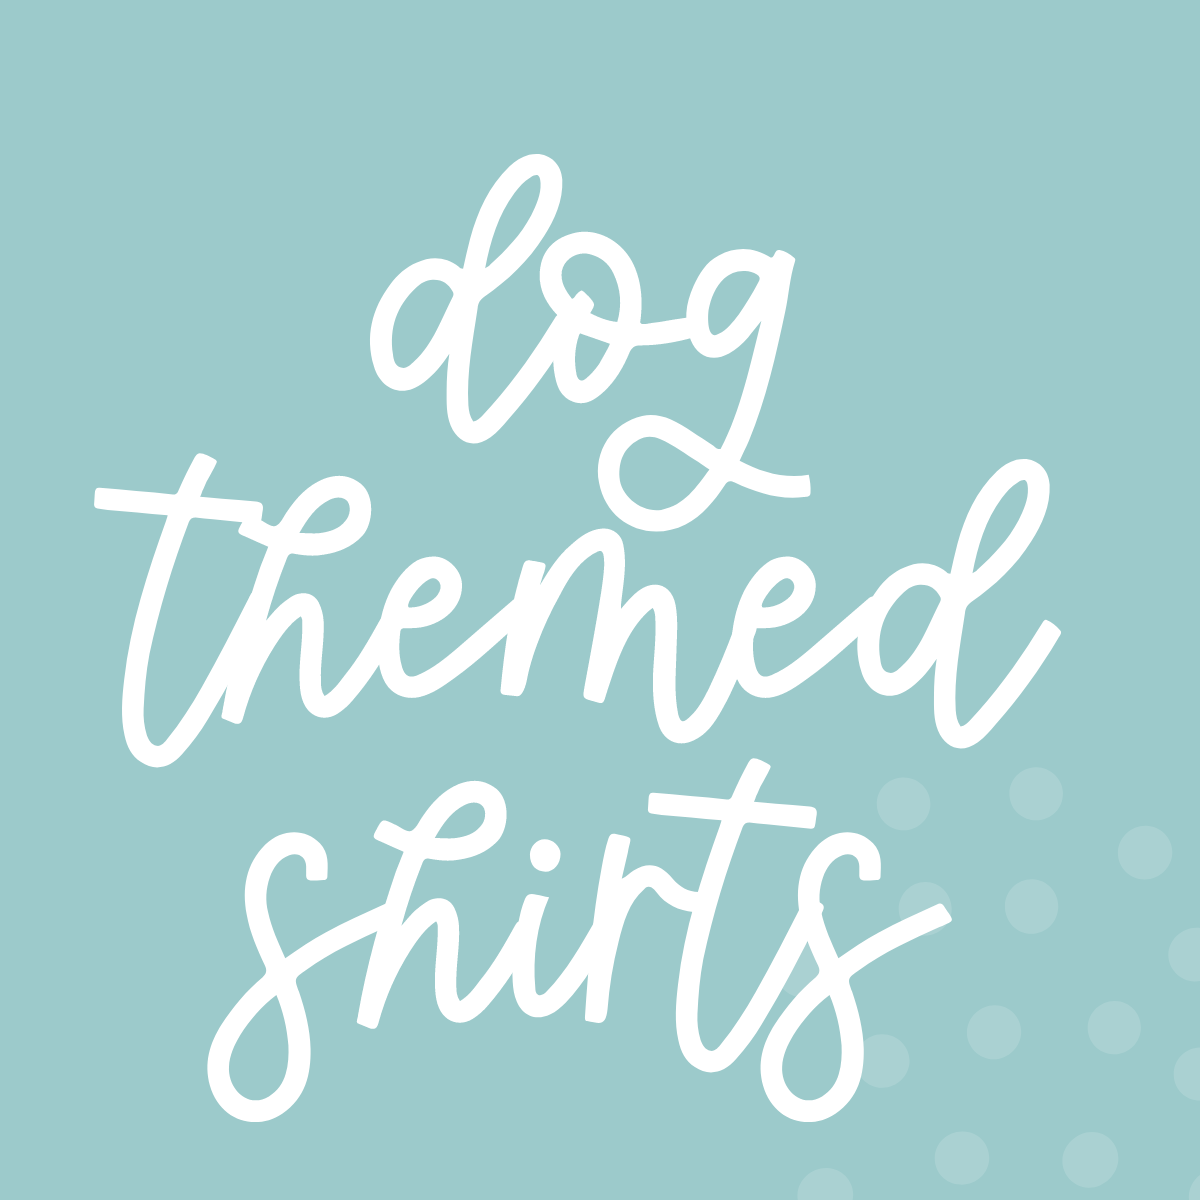 Dog Themed Shirts